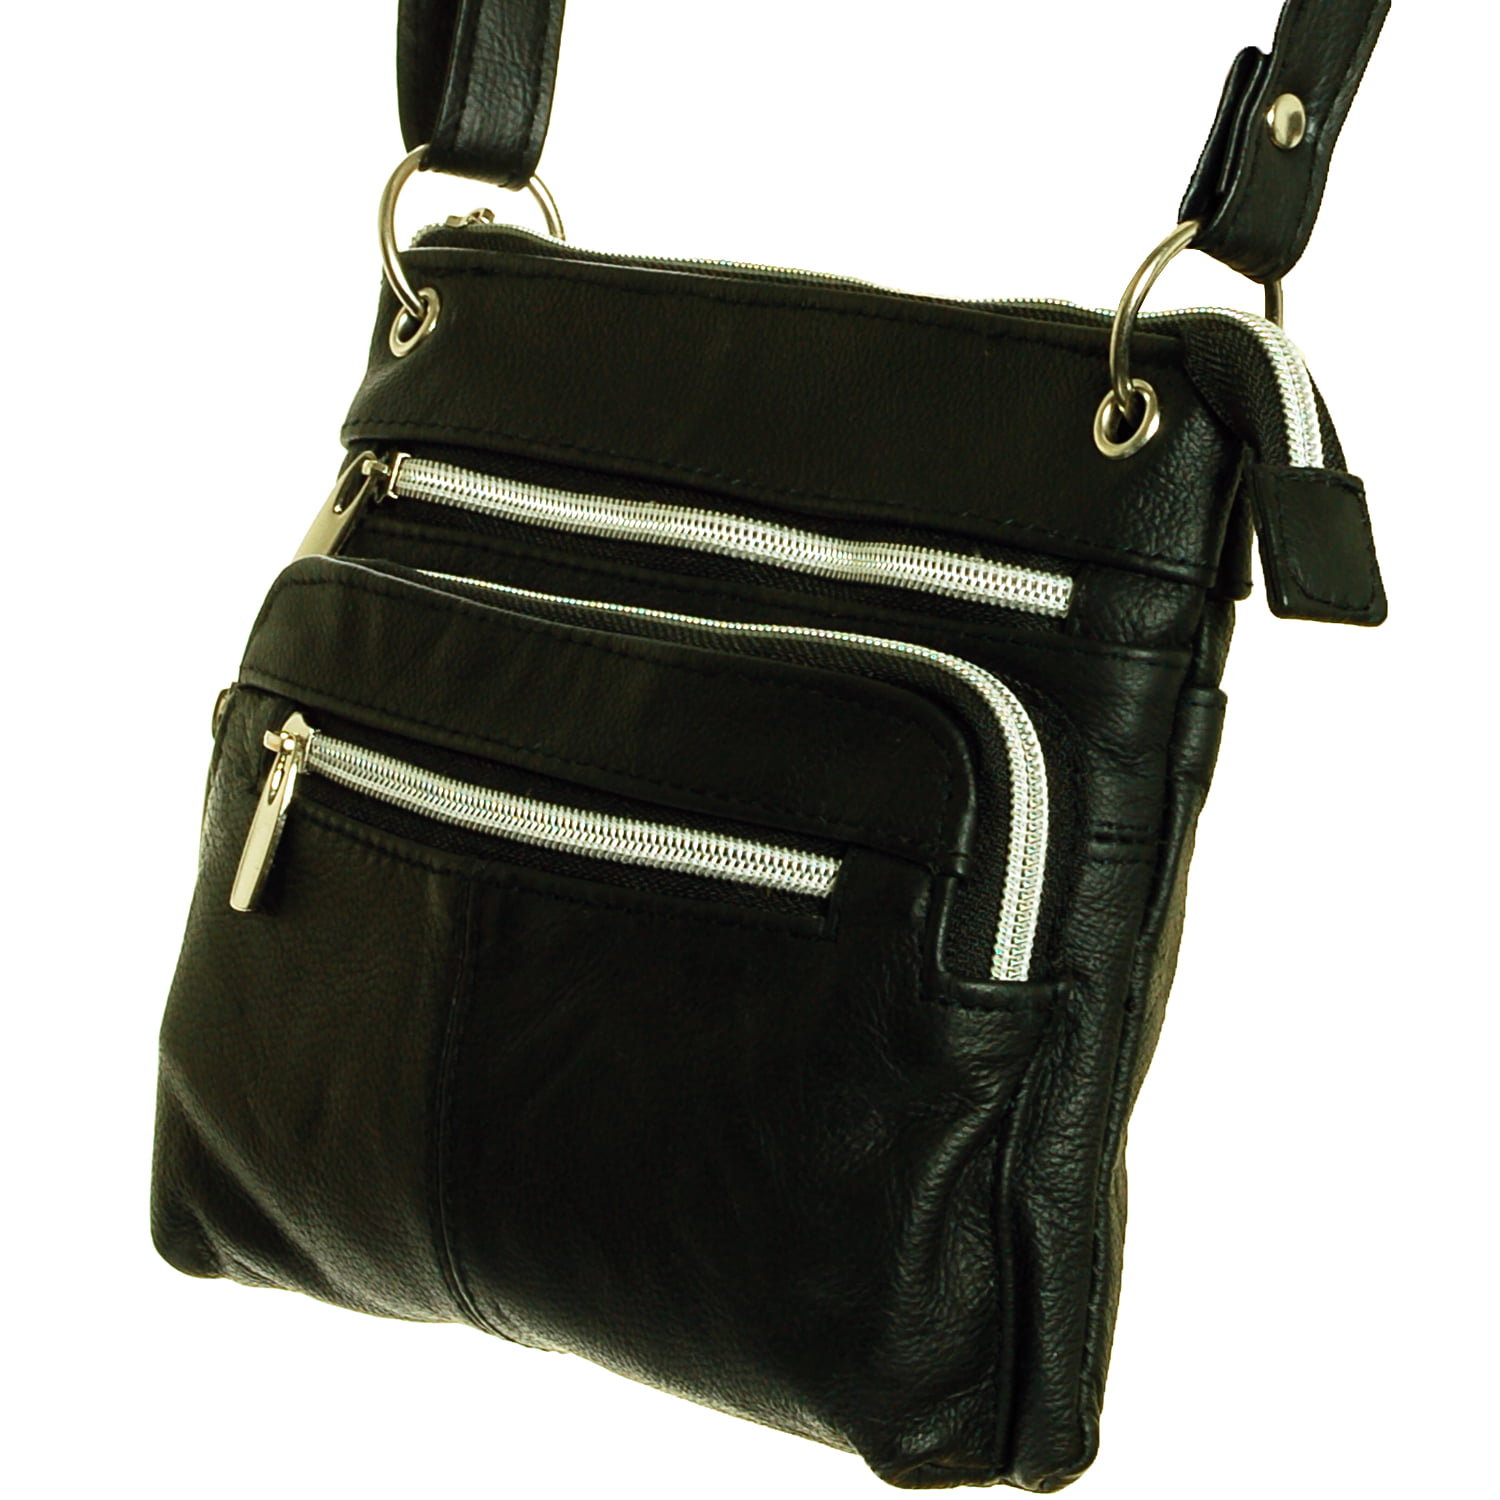 SBR Designs - Women's Leather Purse Cross Body Shoulder Bag Handbag ...